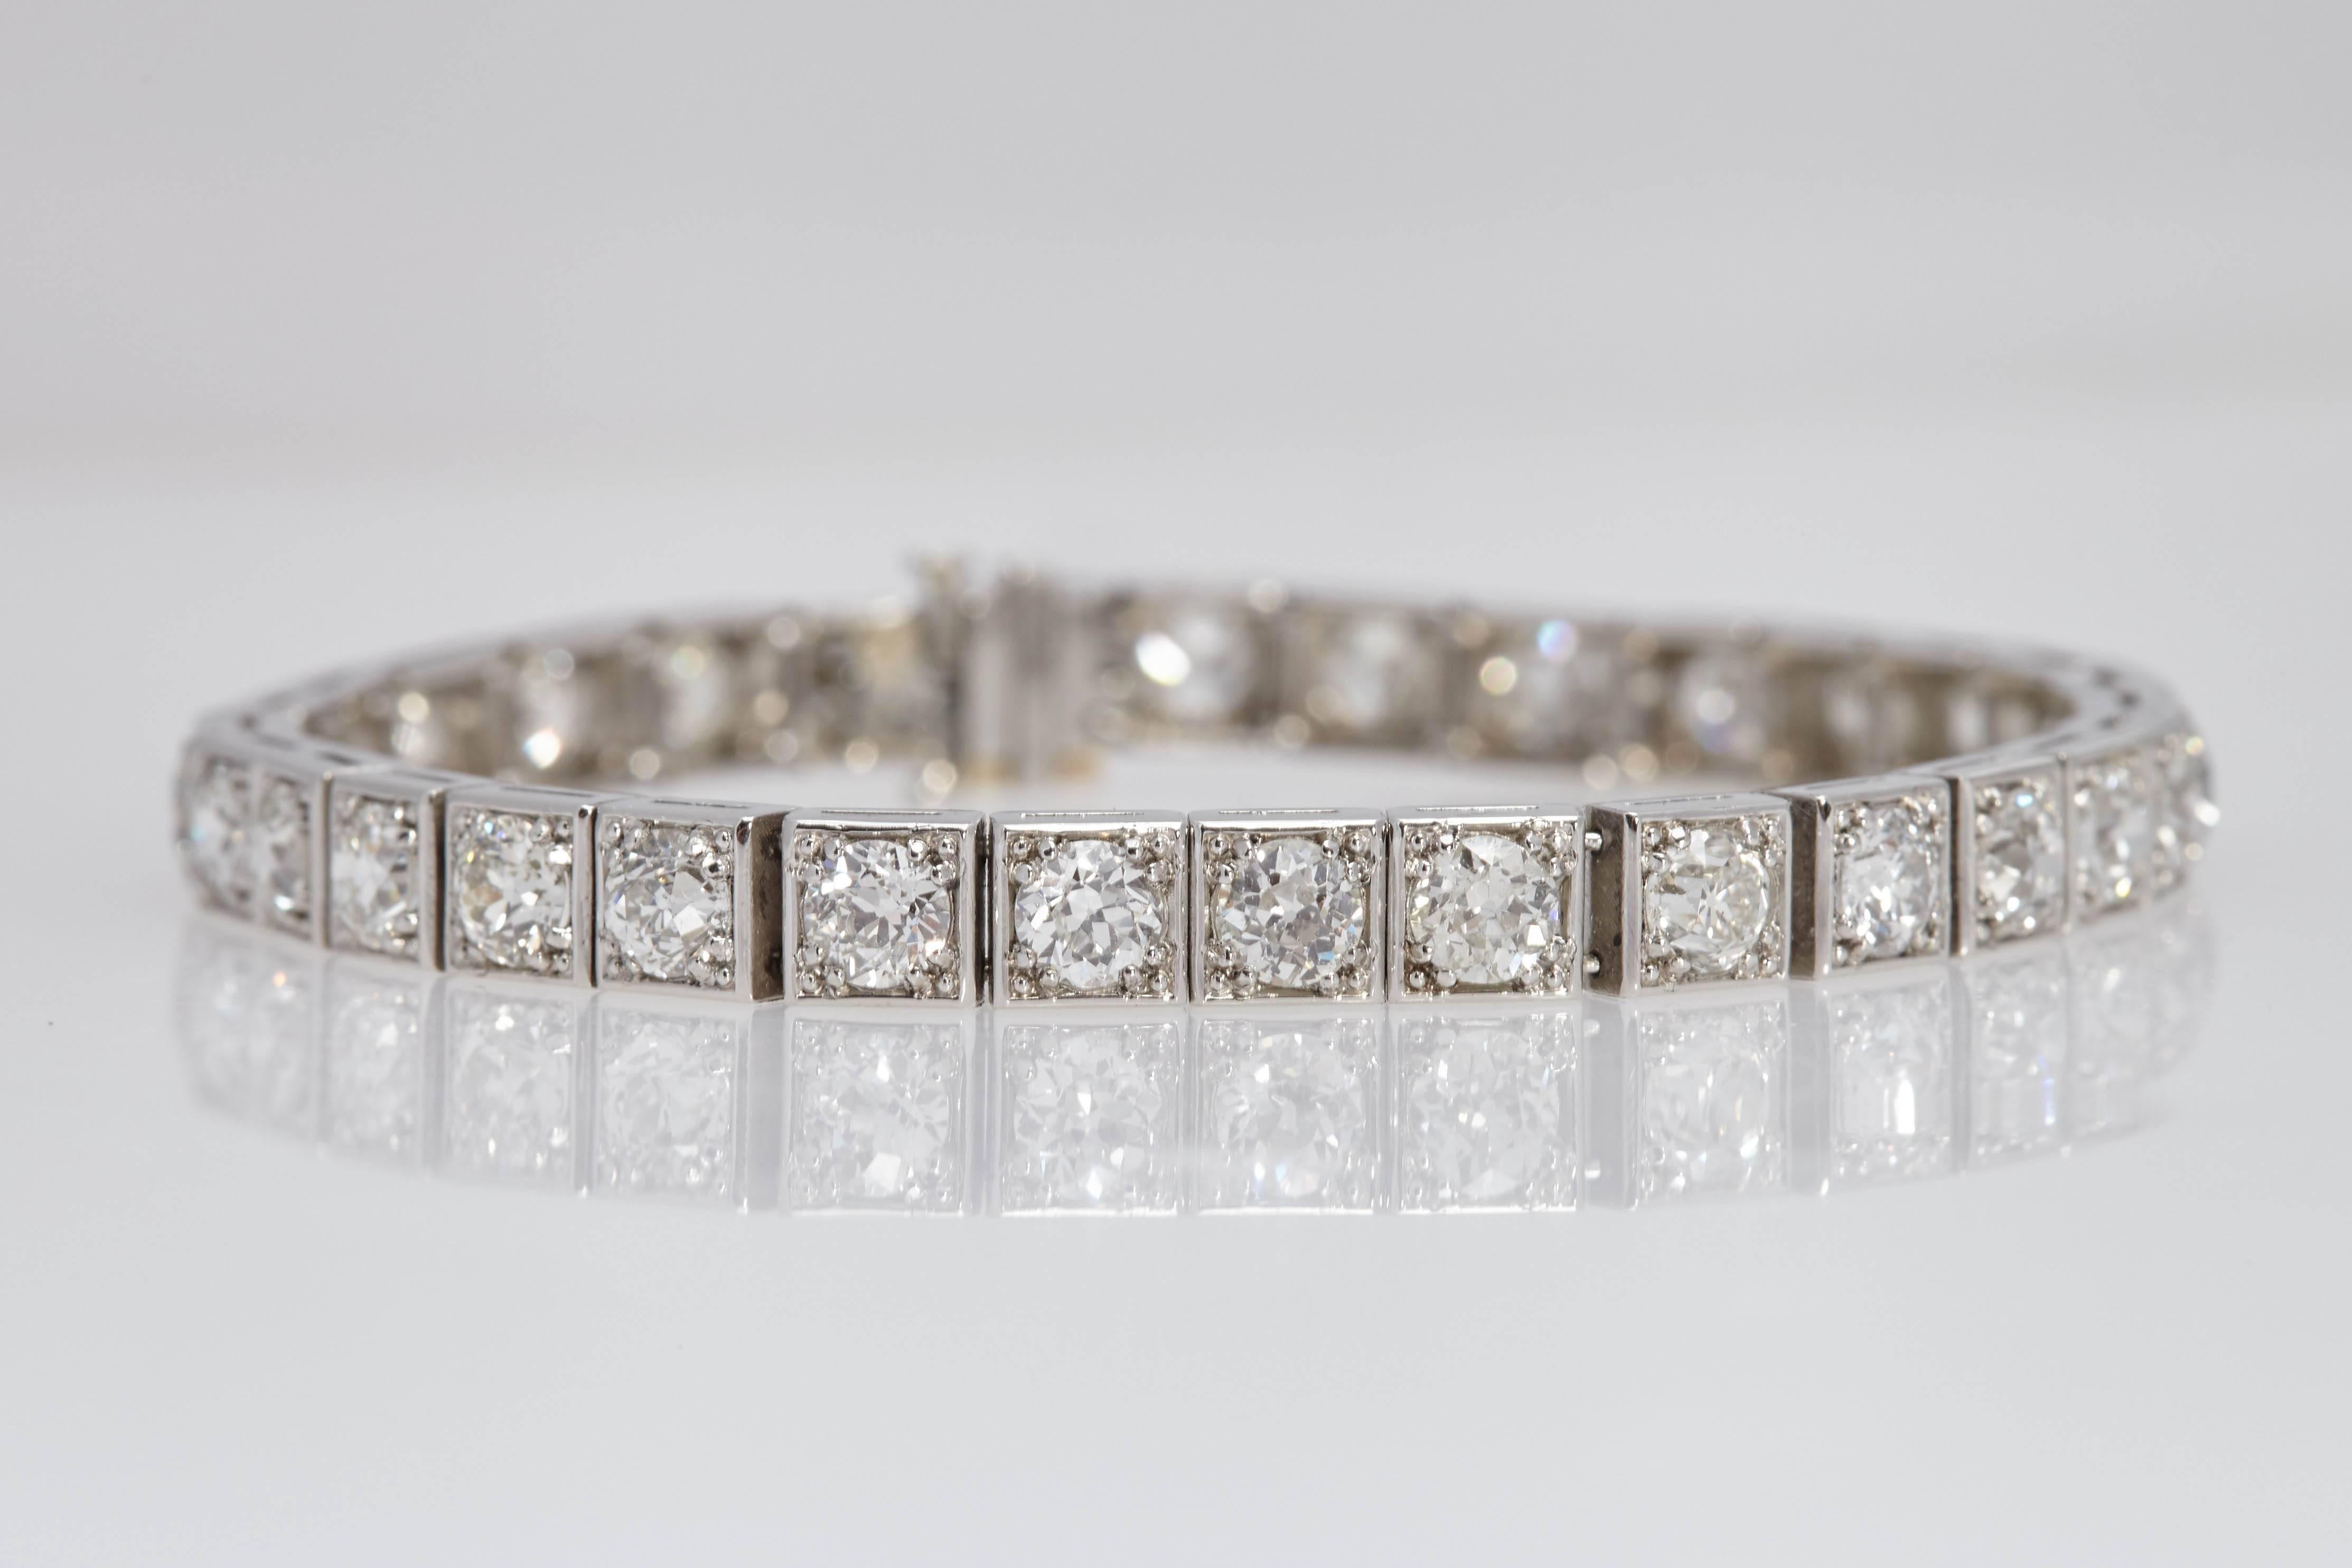 12 carat diamond bracelet